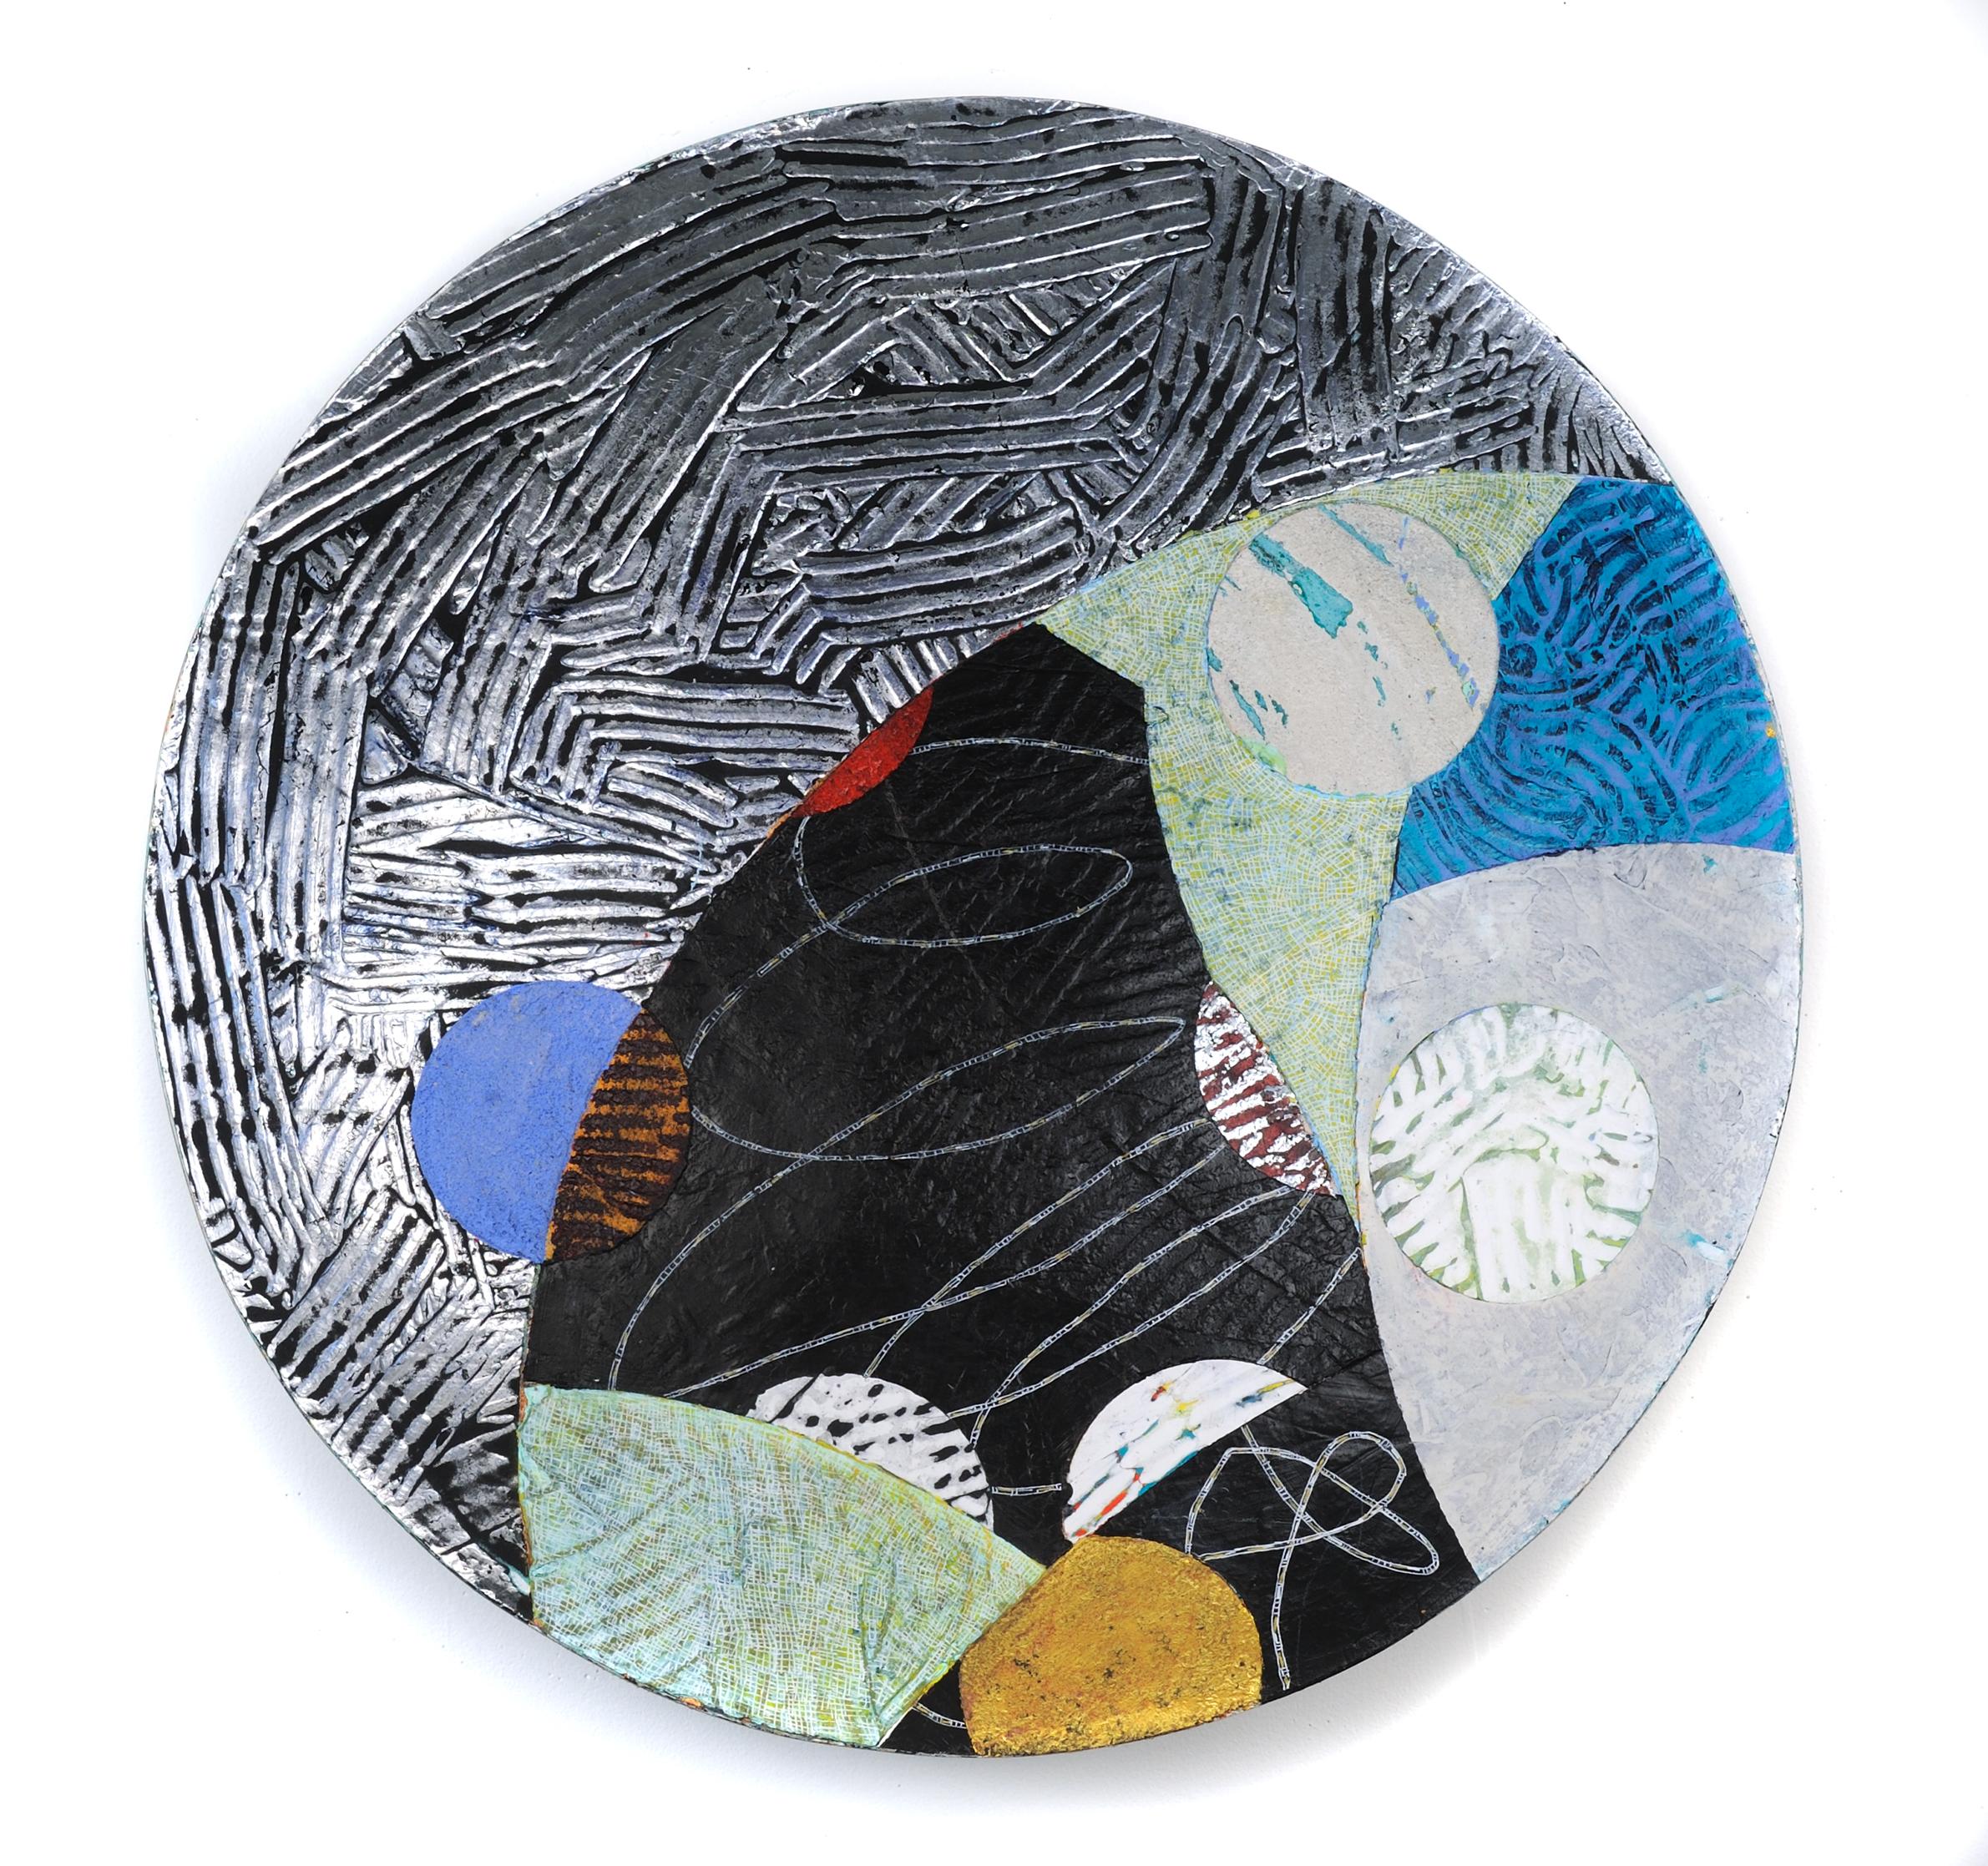 Vessel #2, multicolored mixed media sculptural piece, textured, 22" diameter